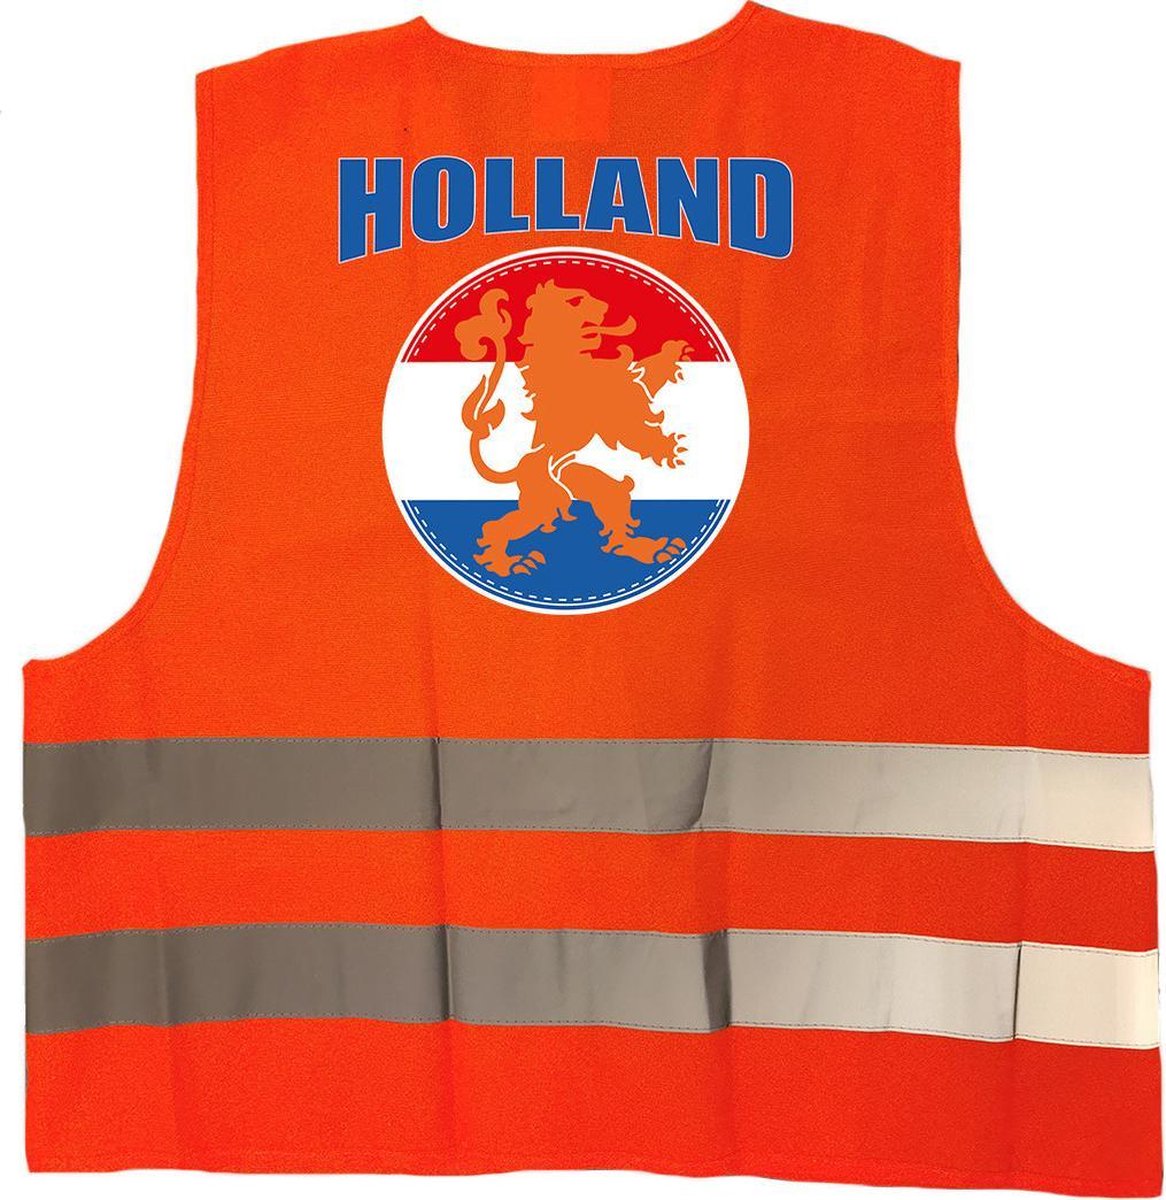 Holland hesje reflecterend - oranje leeuw met Nederlandse vlag - EK / WK / Holland supporter kleding - veiligheidshesje